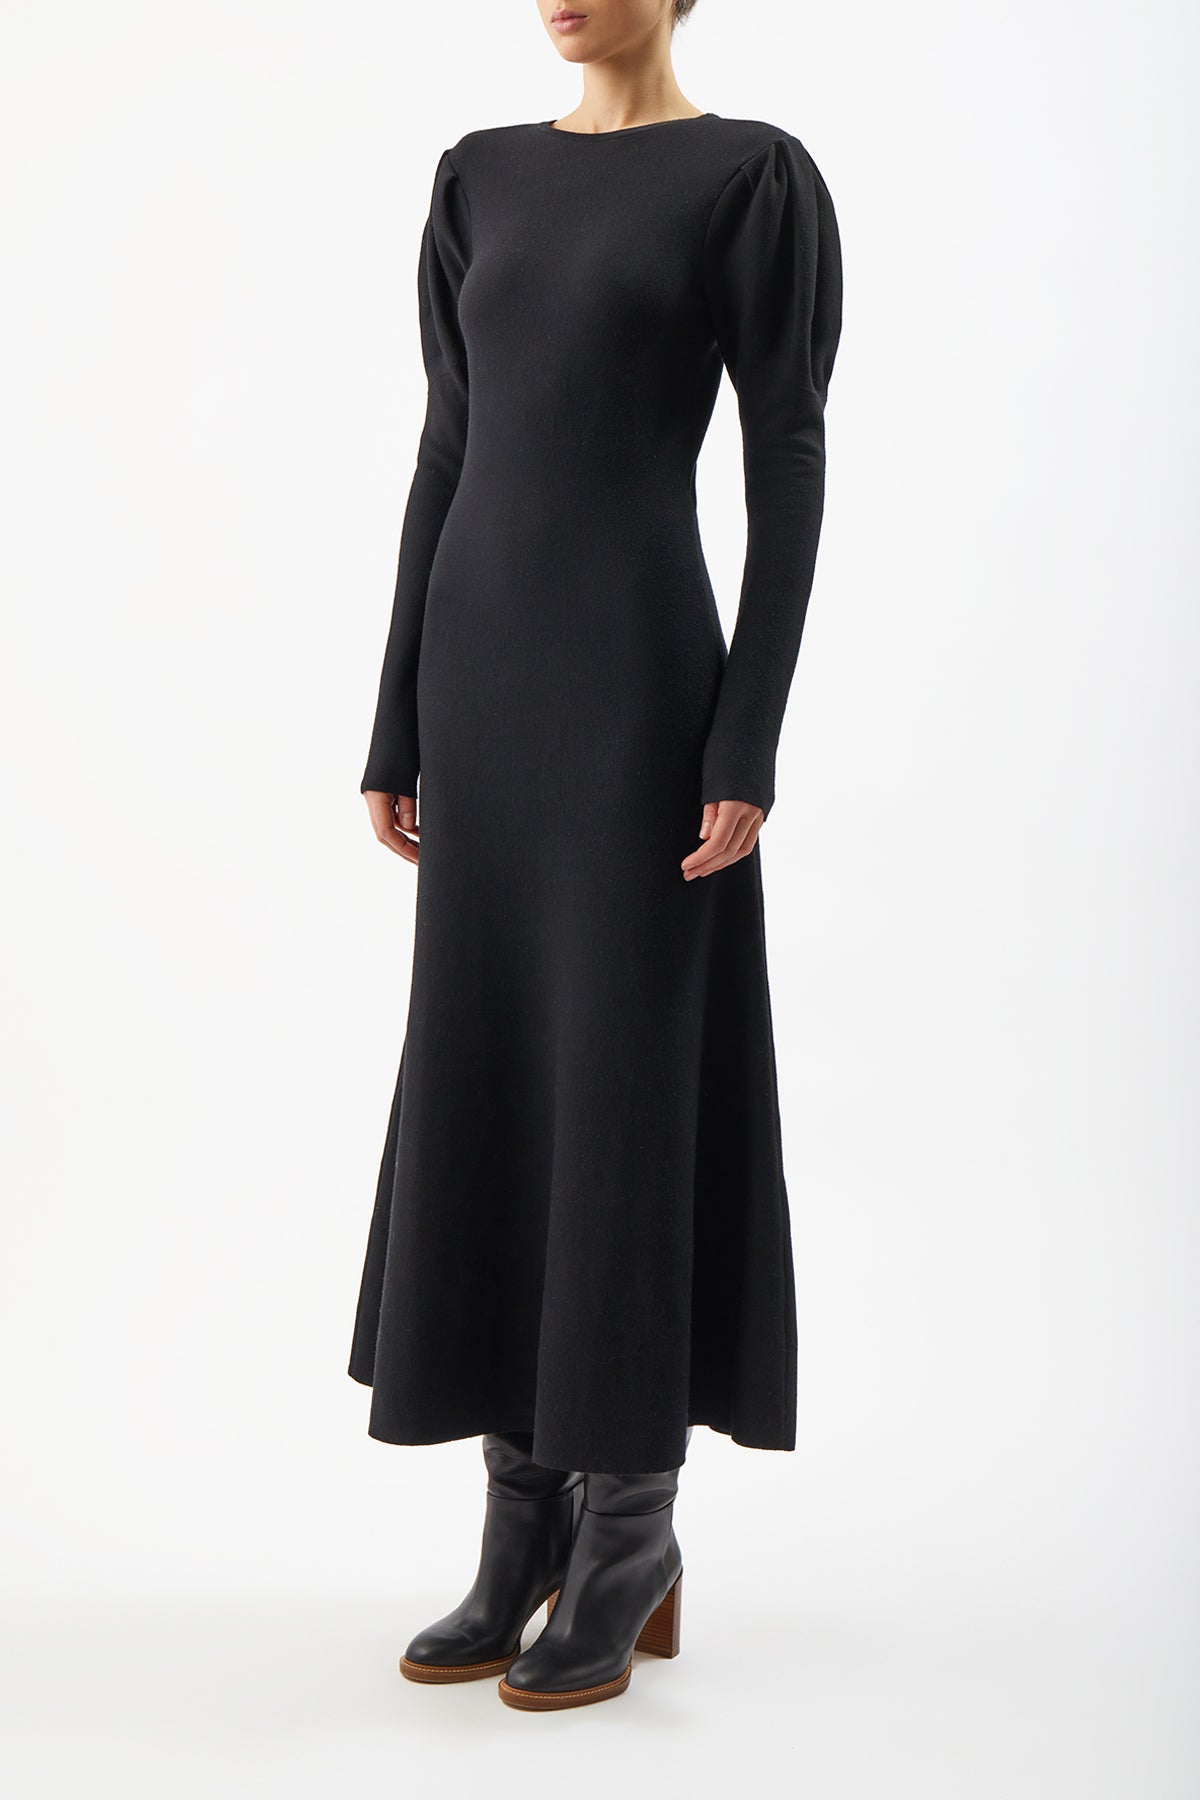 Hannah Knit Dress in Black Merino Wool Cashmere